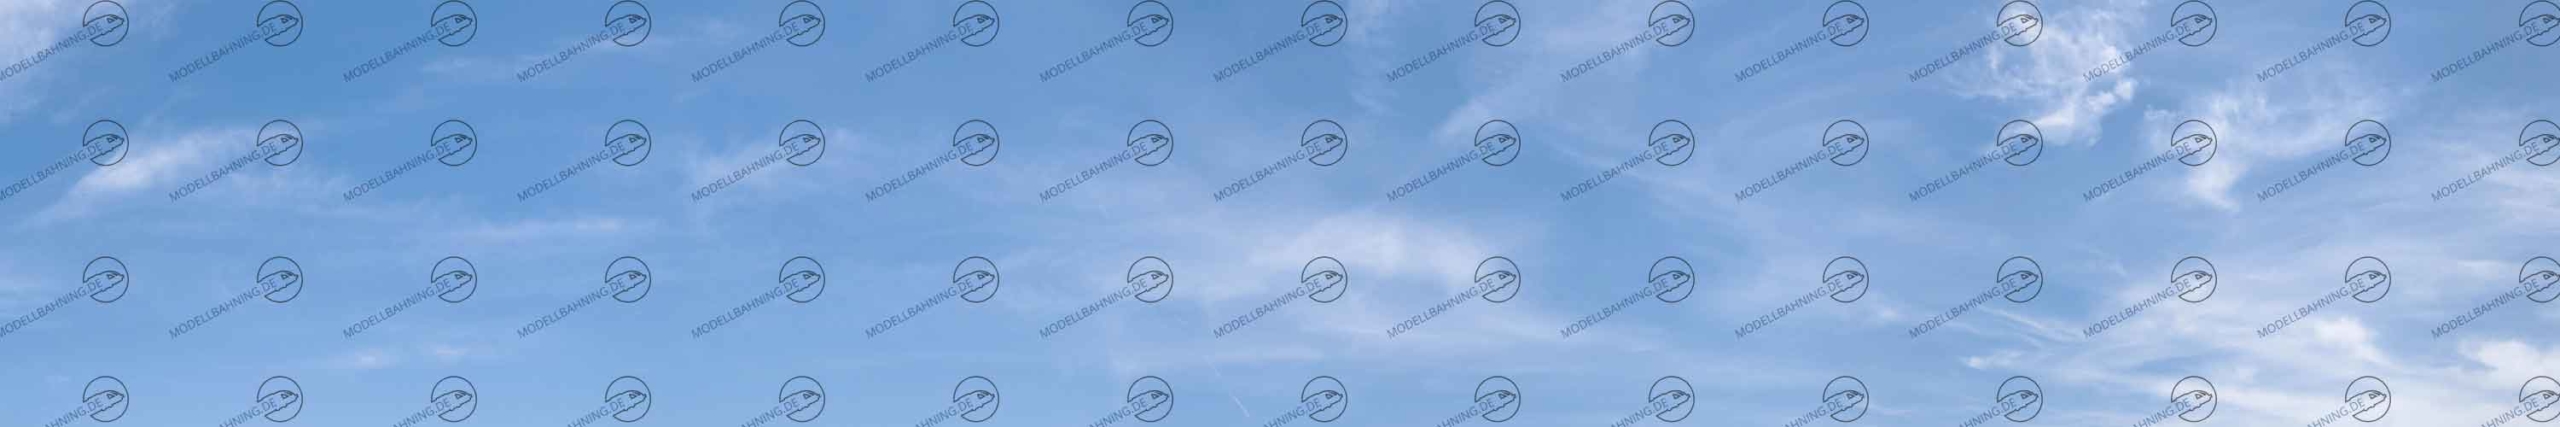 Endloser Himmel Teil 2 – Modellbahn Hintergrund 300cm x 50 cm 1